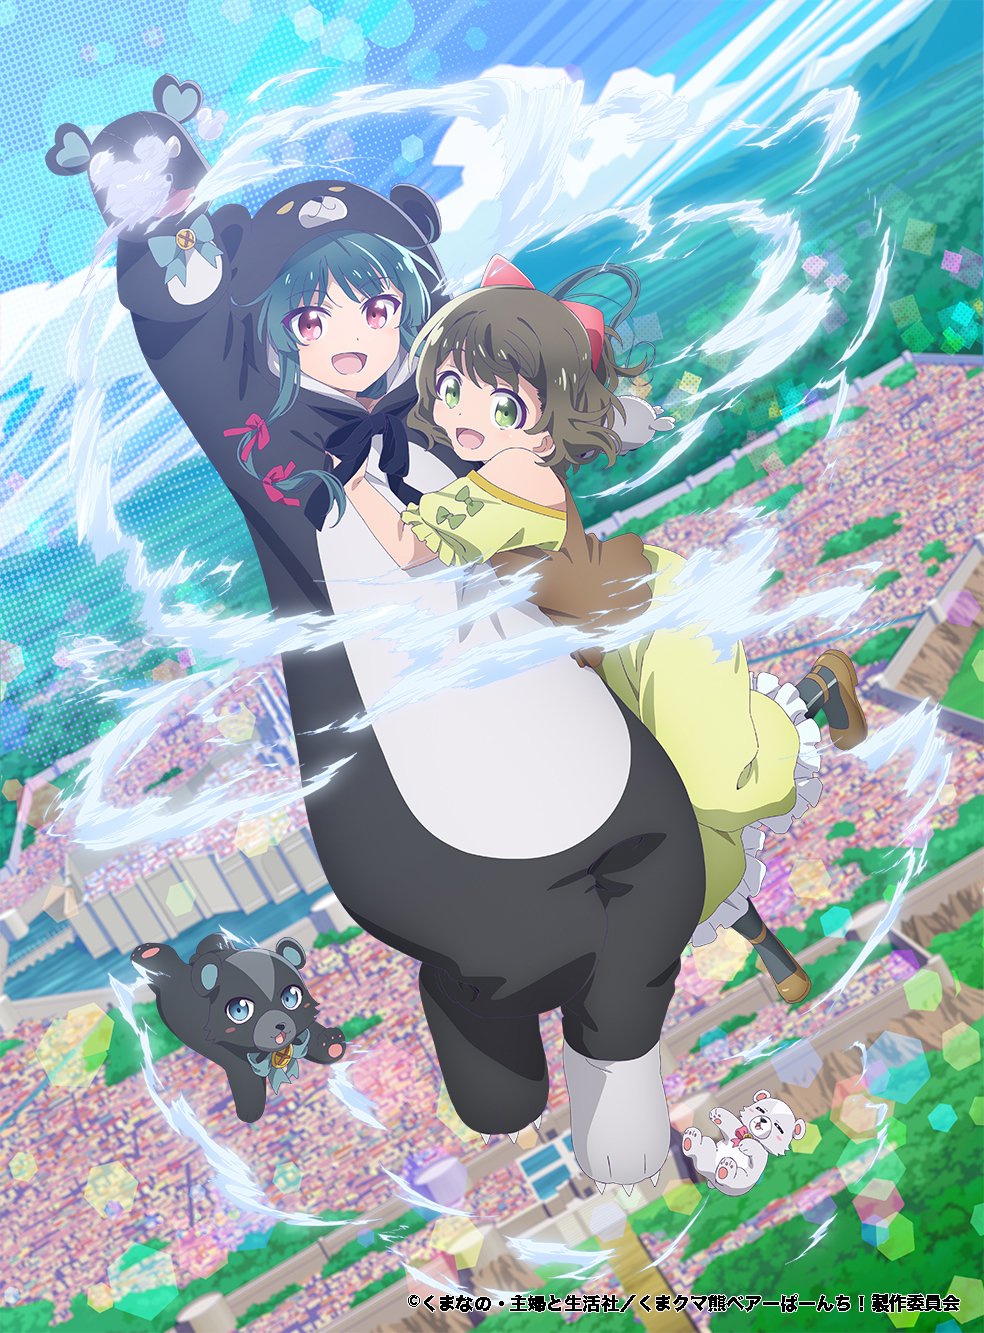 Hình ảnh chính của anime Kuma Kuma Bear Season 2